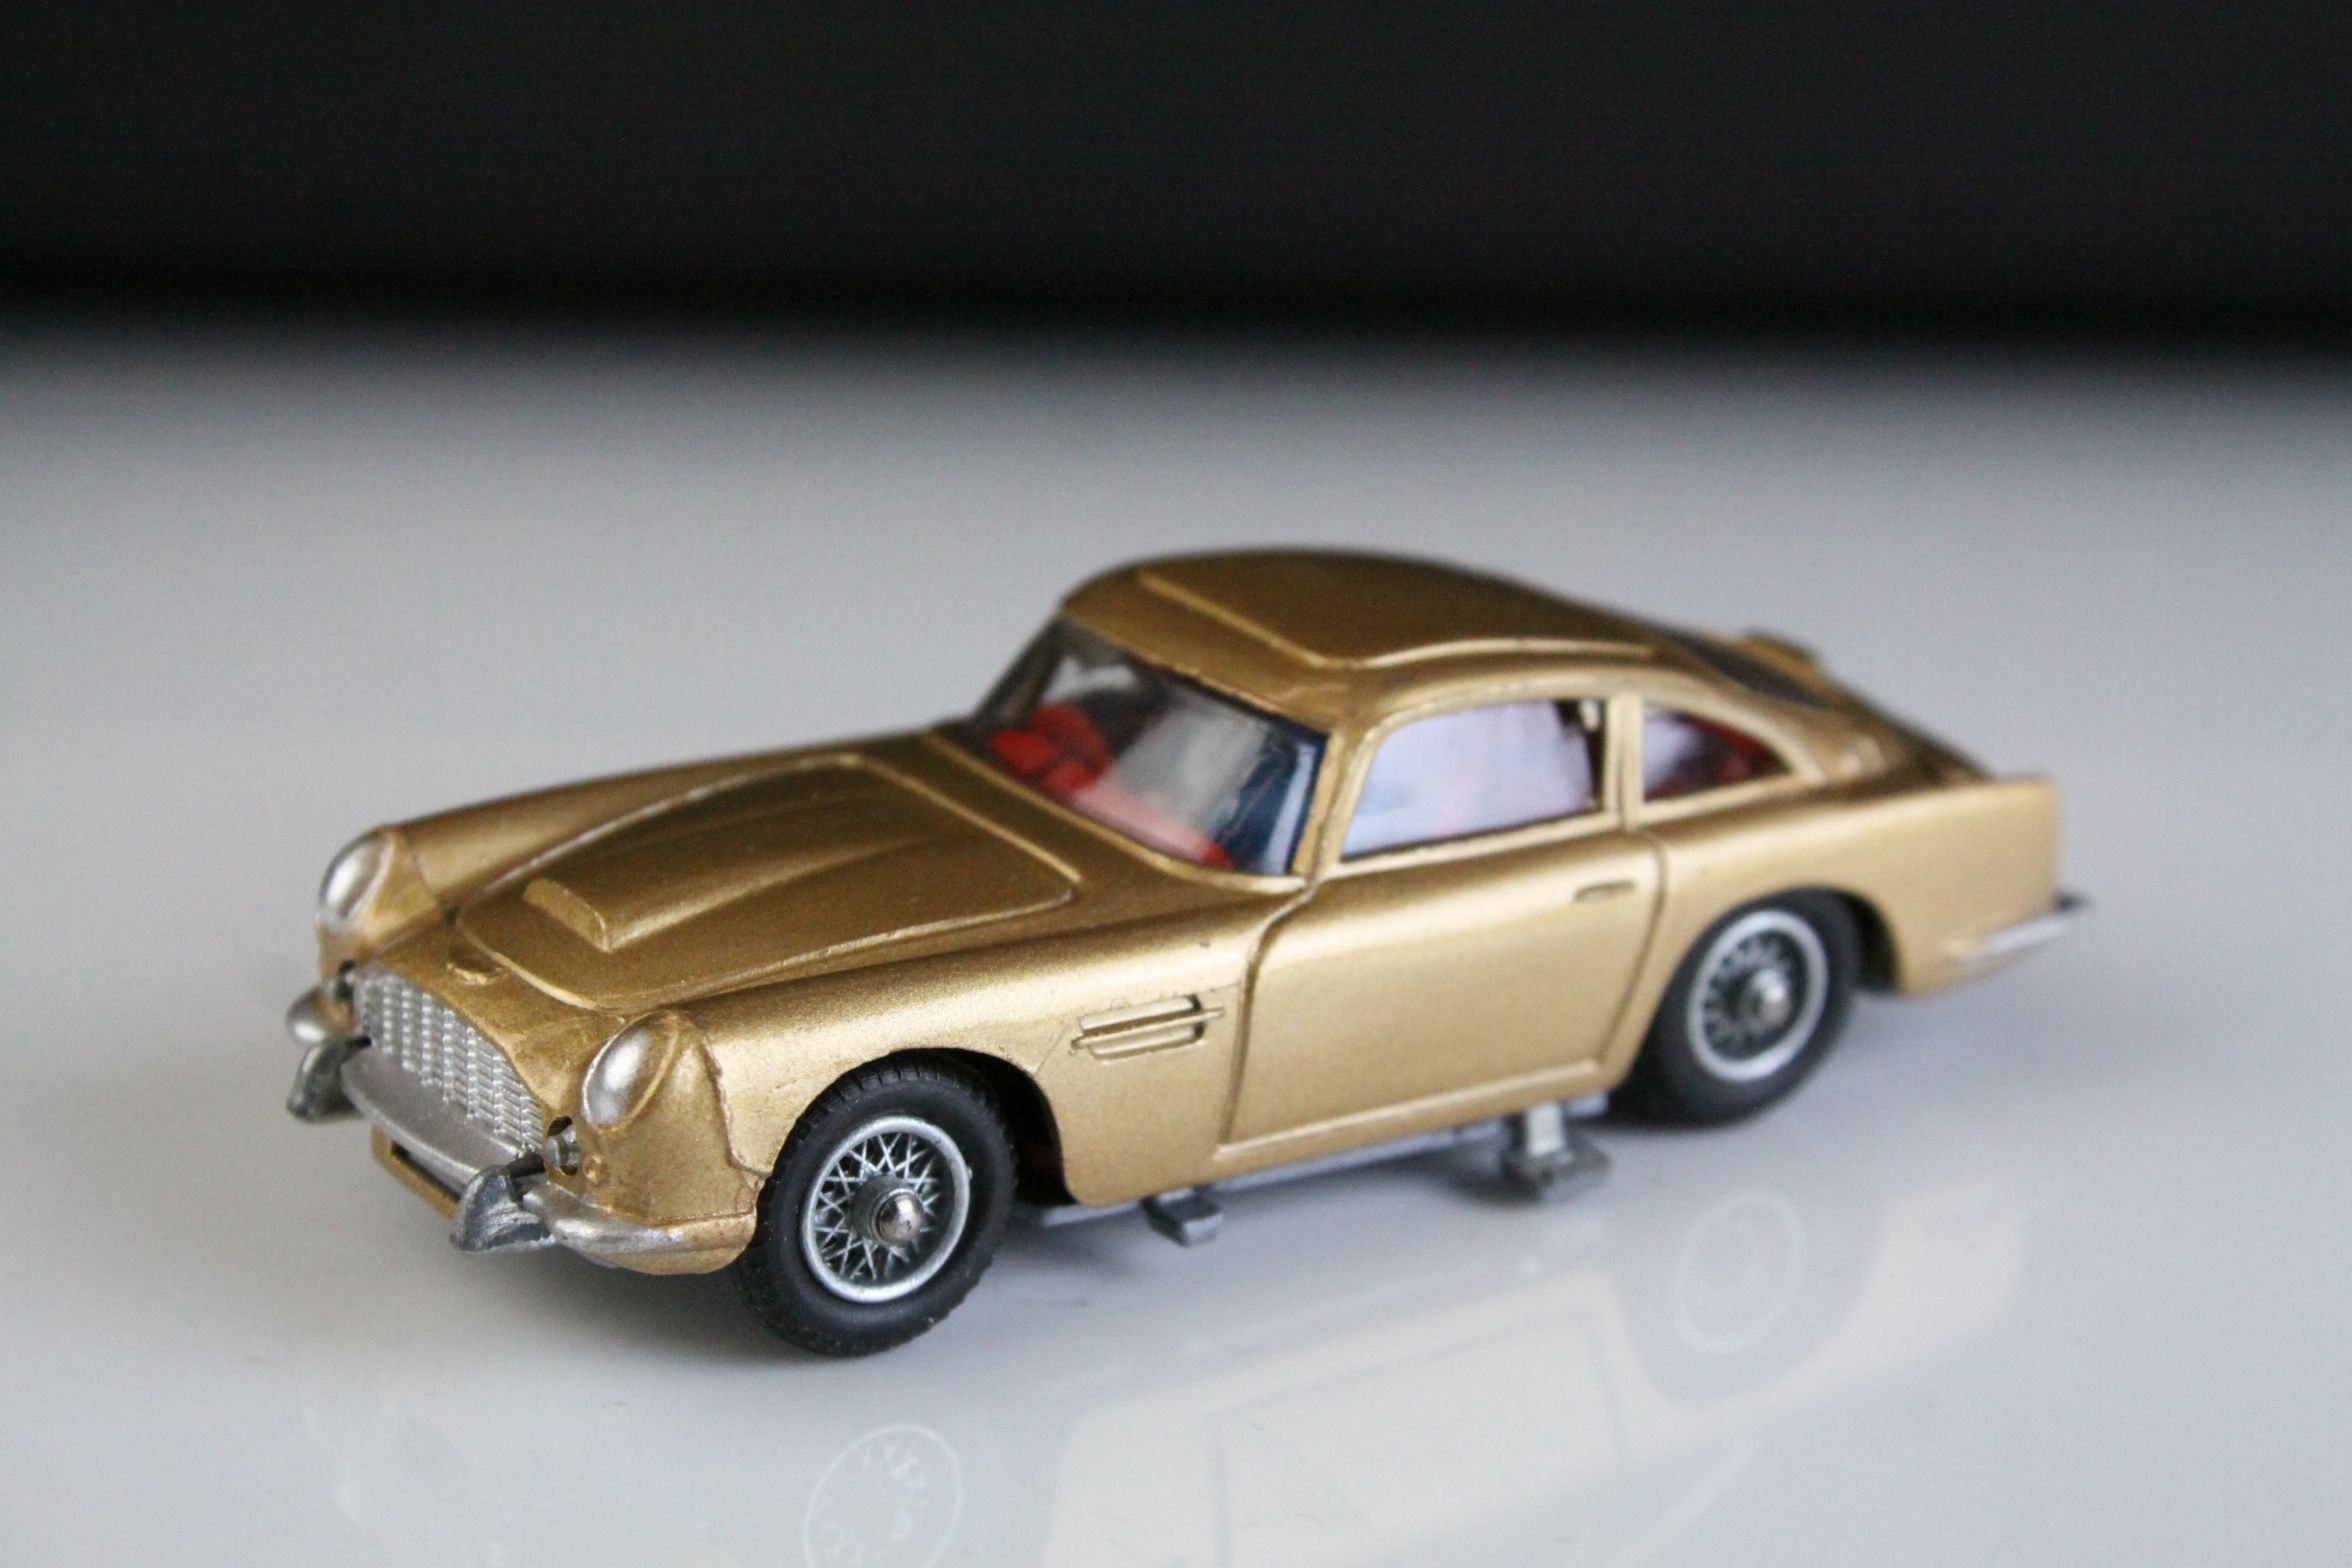 Boxed Corgi 261 James Bond 007 Aston Martin diecast model, complete with figures, unused - Image 2 of 18